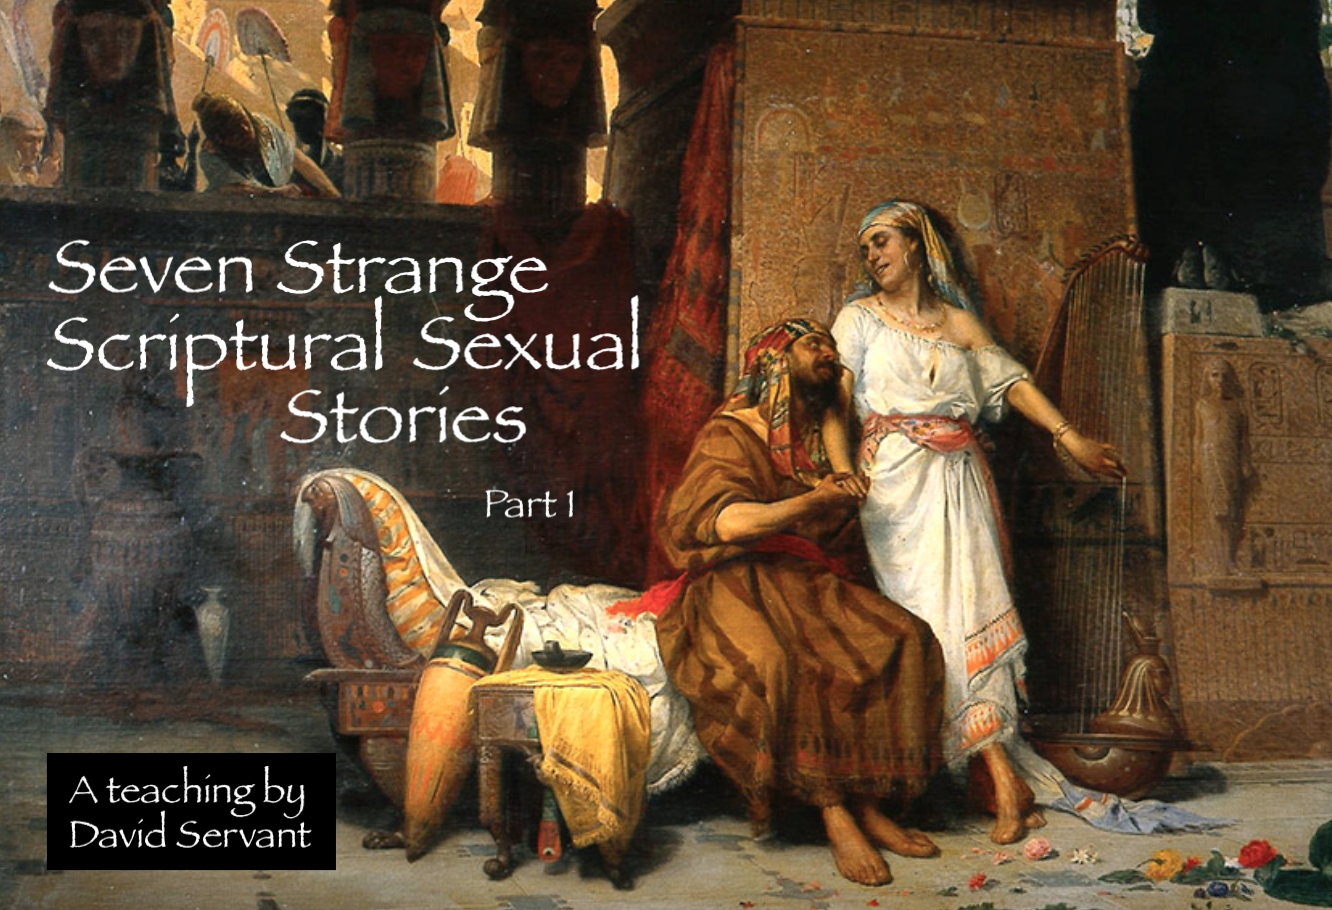 Seven Strange Scriptural Sexual Stories, Part 1